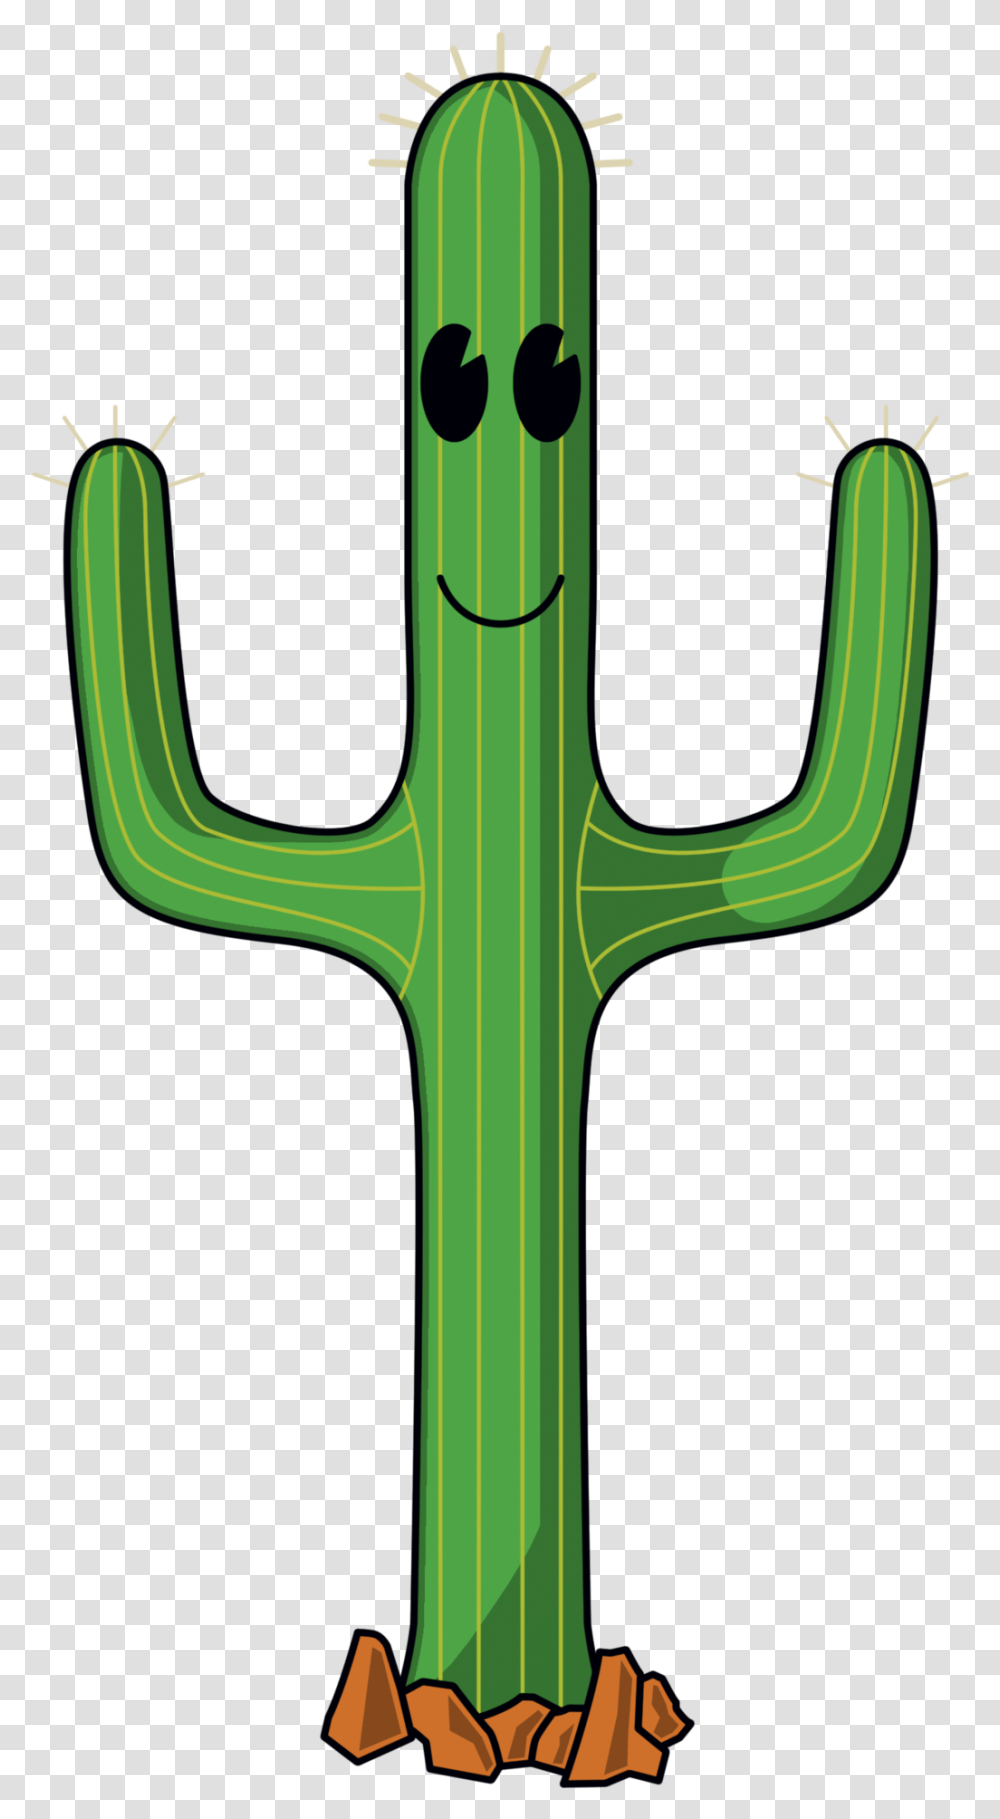 Cartoon Cactus Clipart Library Animated Cactus Background Cactus Cartoon, Plant, Aloe, Tree, Vegetation Transparent Png